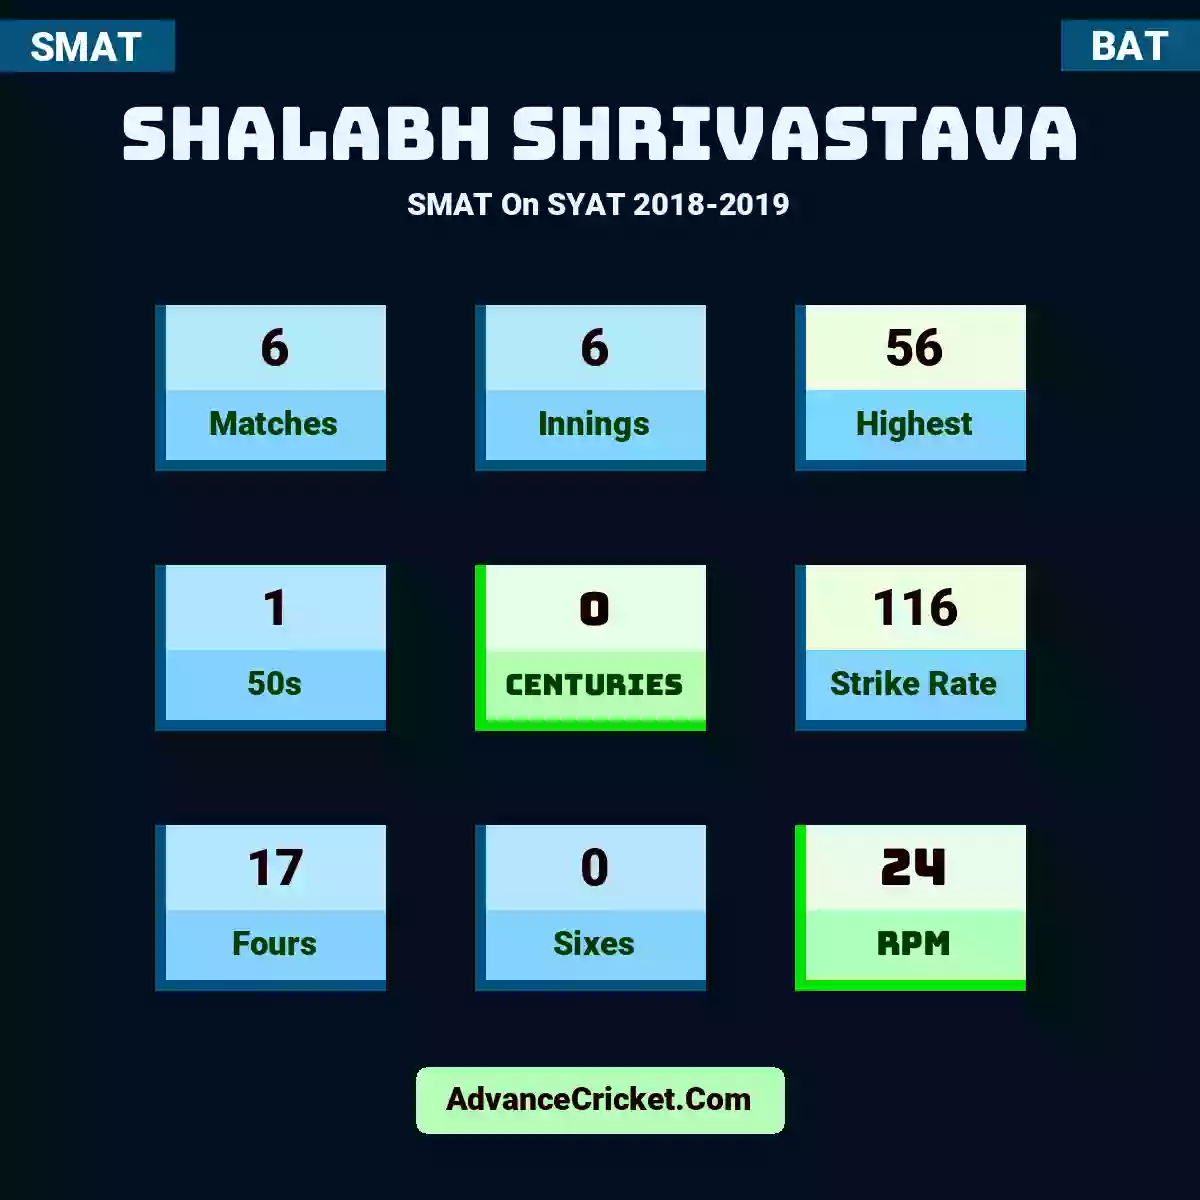 Shalabh Shrivastava SMAT  On SYAT 2018-2019, Shalabh Shrivastava played 6 matches, scored 56 runs as highest, 1 half-centuries, and 0 centuries, with a strike rate of 116. S.Shrivastava hit 17 fours and 0 sixes, with an RPM of 24.